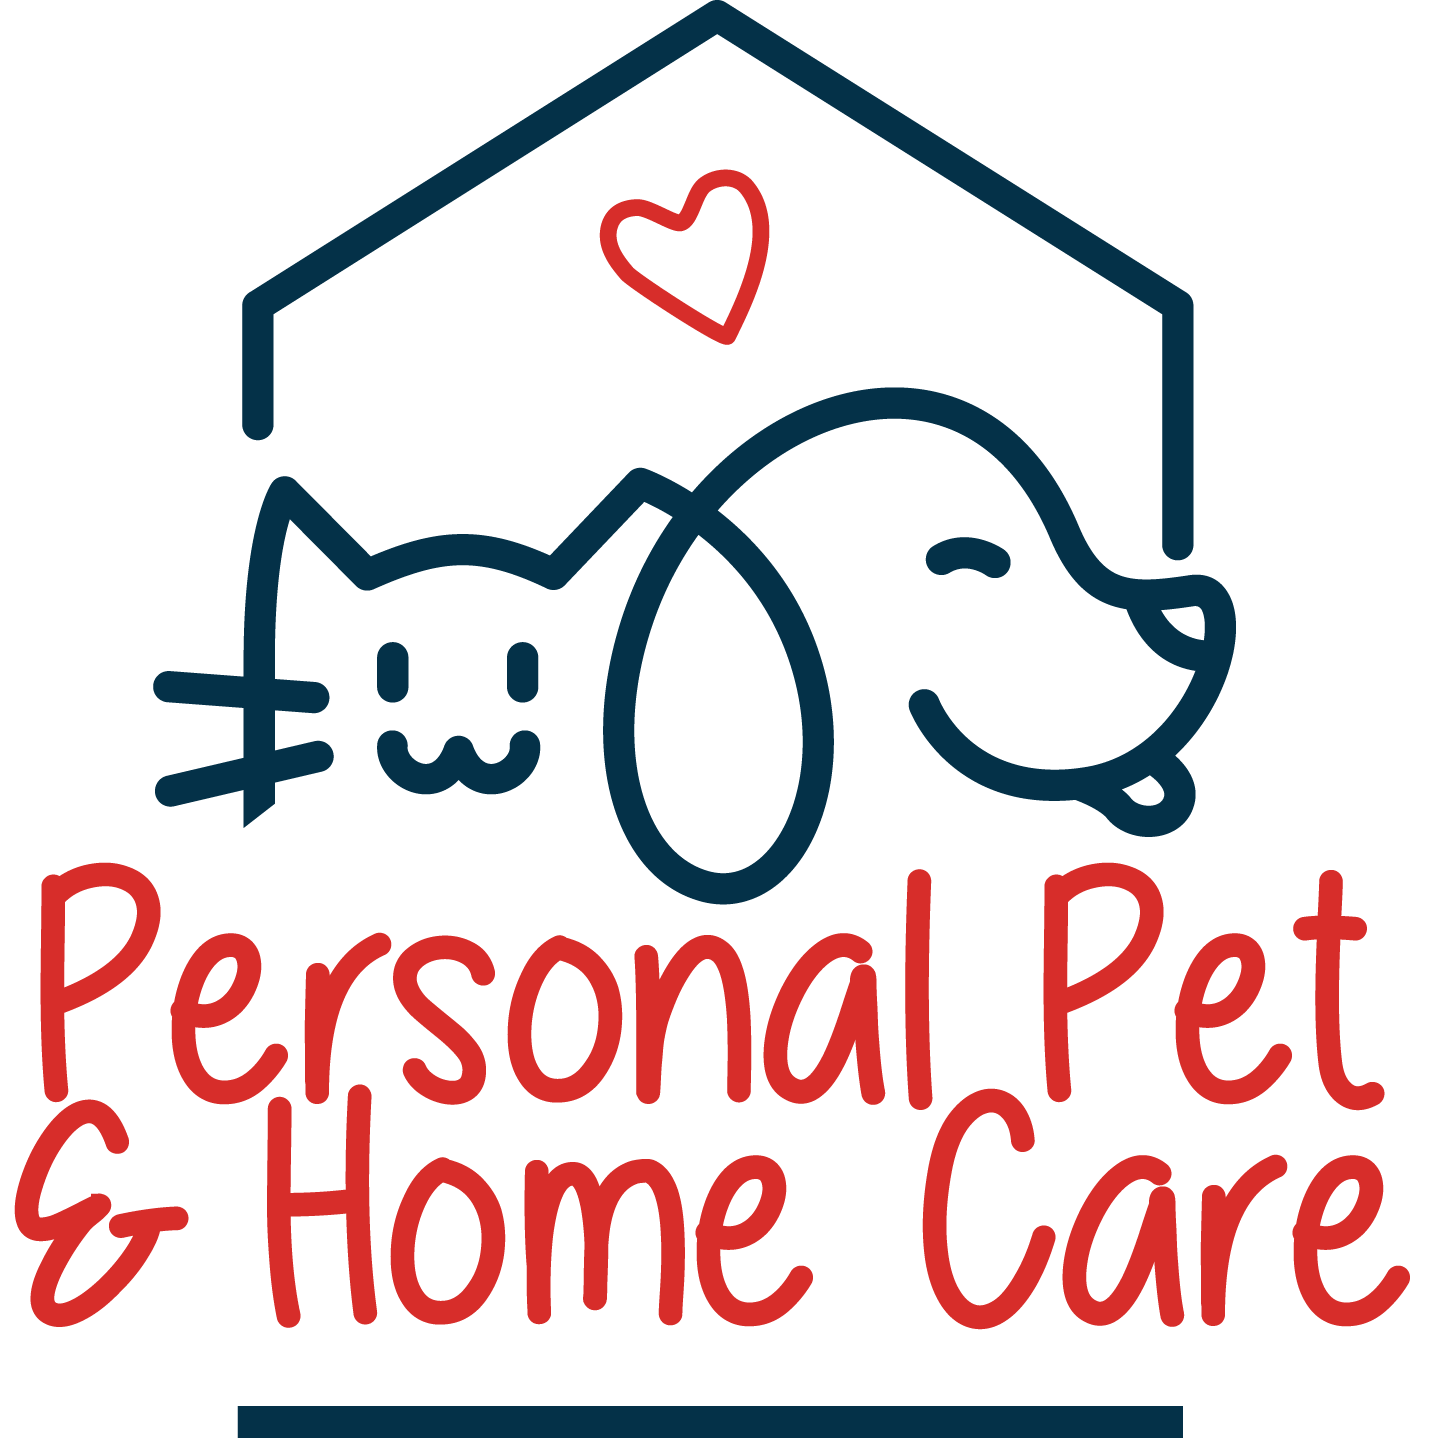  Personal Pet &amp; Home Care. - Allen, TX   https://personalpetandhomecare.com/  